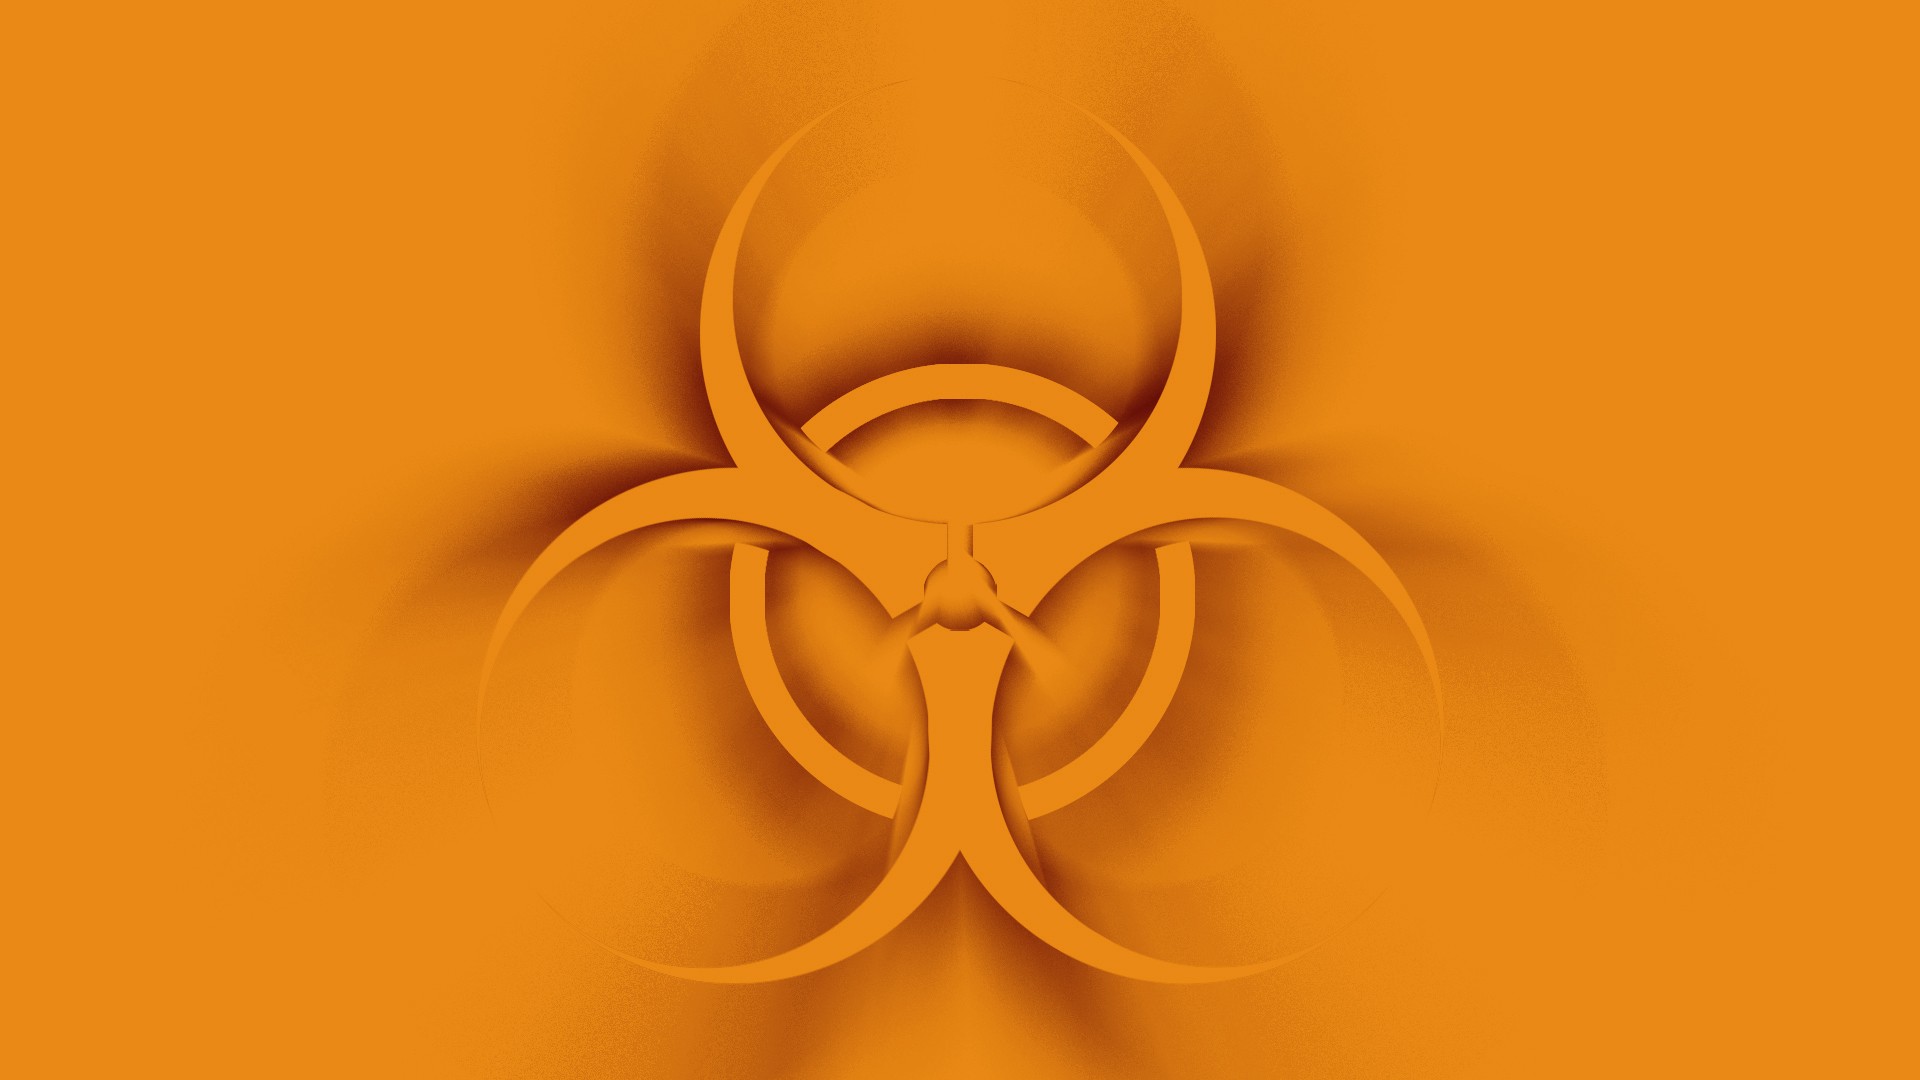 General 1920x1080 digital art minimalism biohazard circle yellow radiation orange background simple background